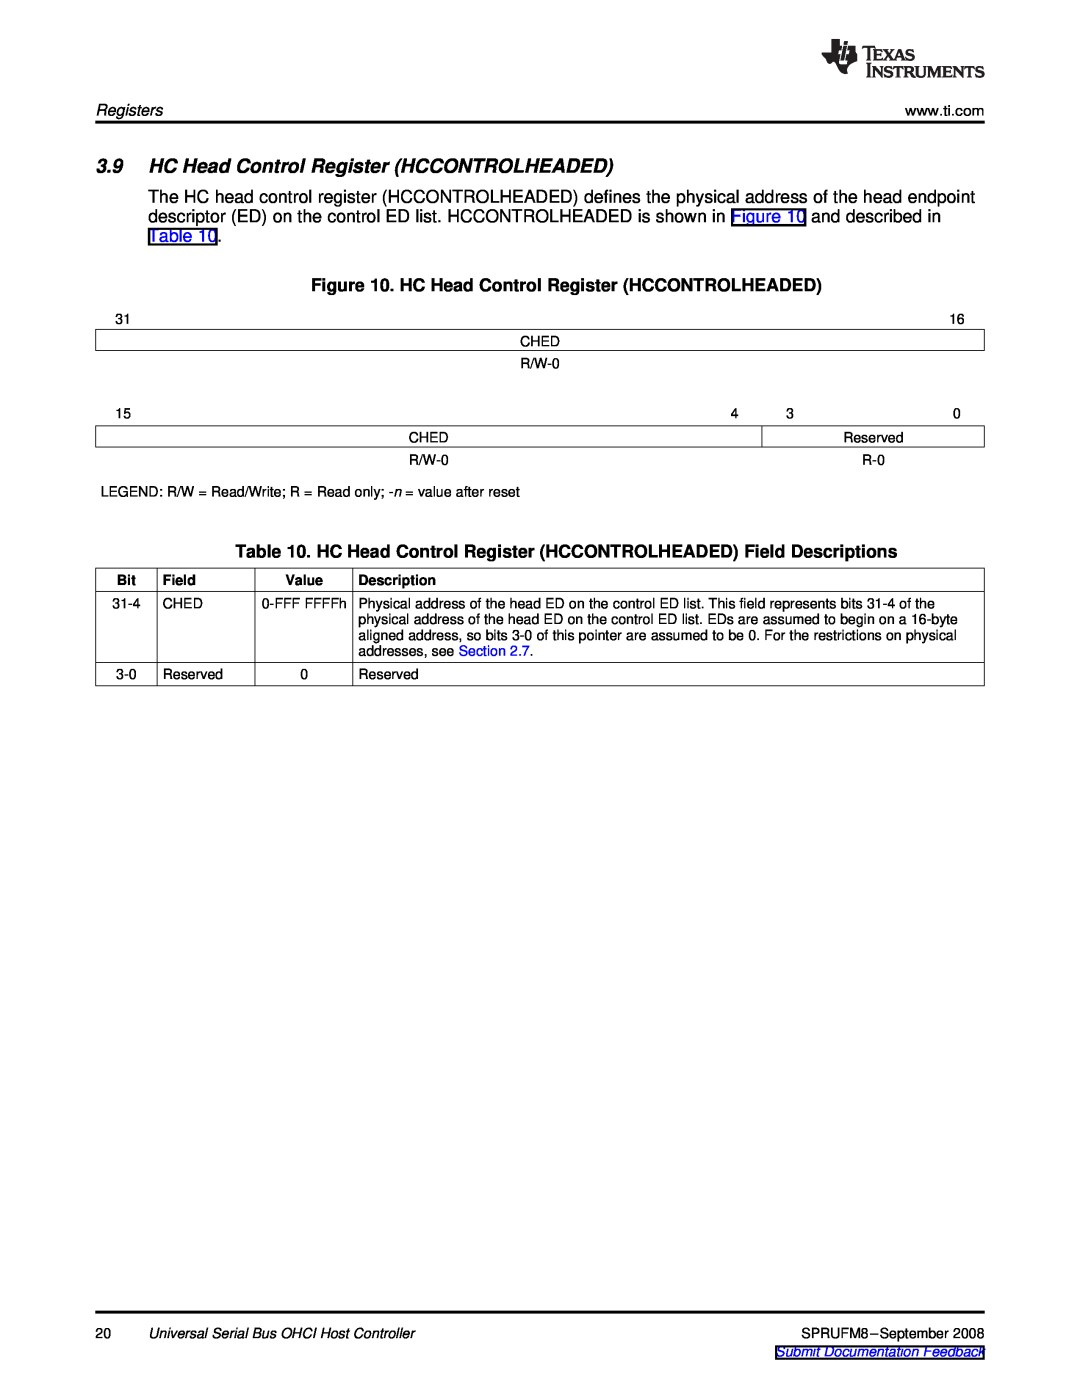 Texas Instruments TMS320C6747 DSP manual HC Head Control Register HCCONTROLHEADED, Registers, Field, Description 